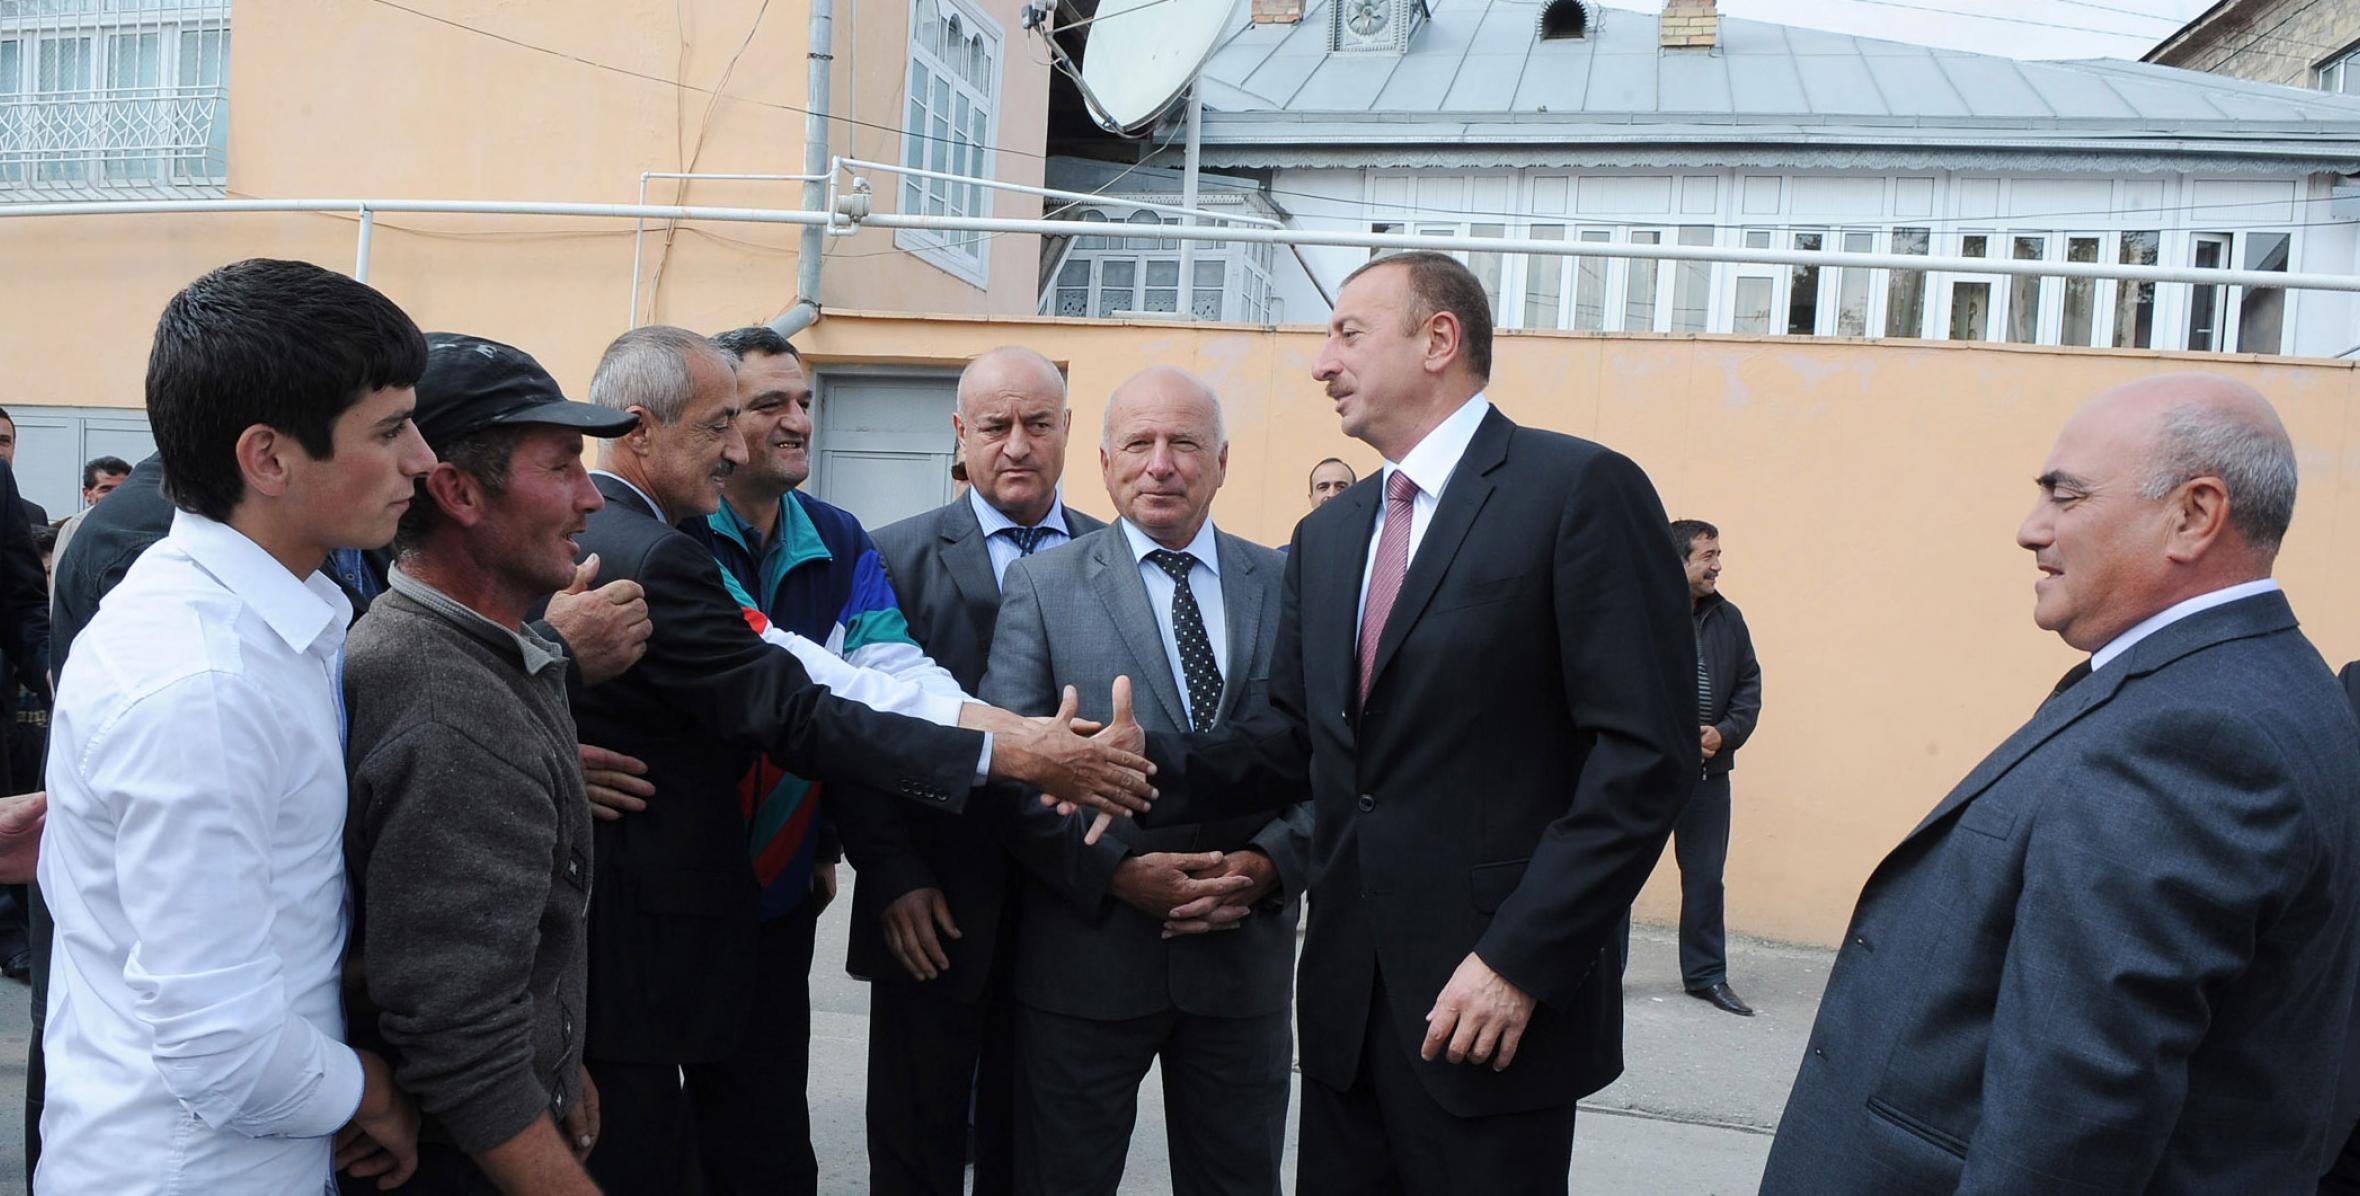 Ilham Aliyev met with residents of the Girmizi Gasaba settlement in Guba